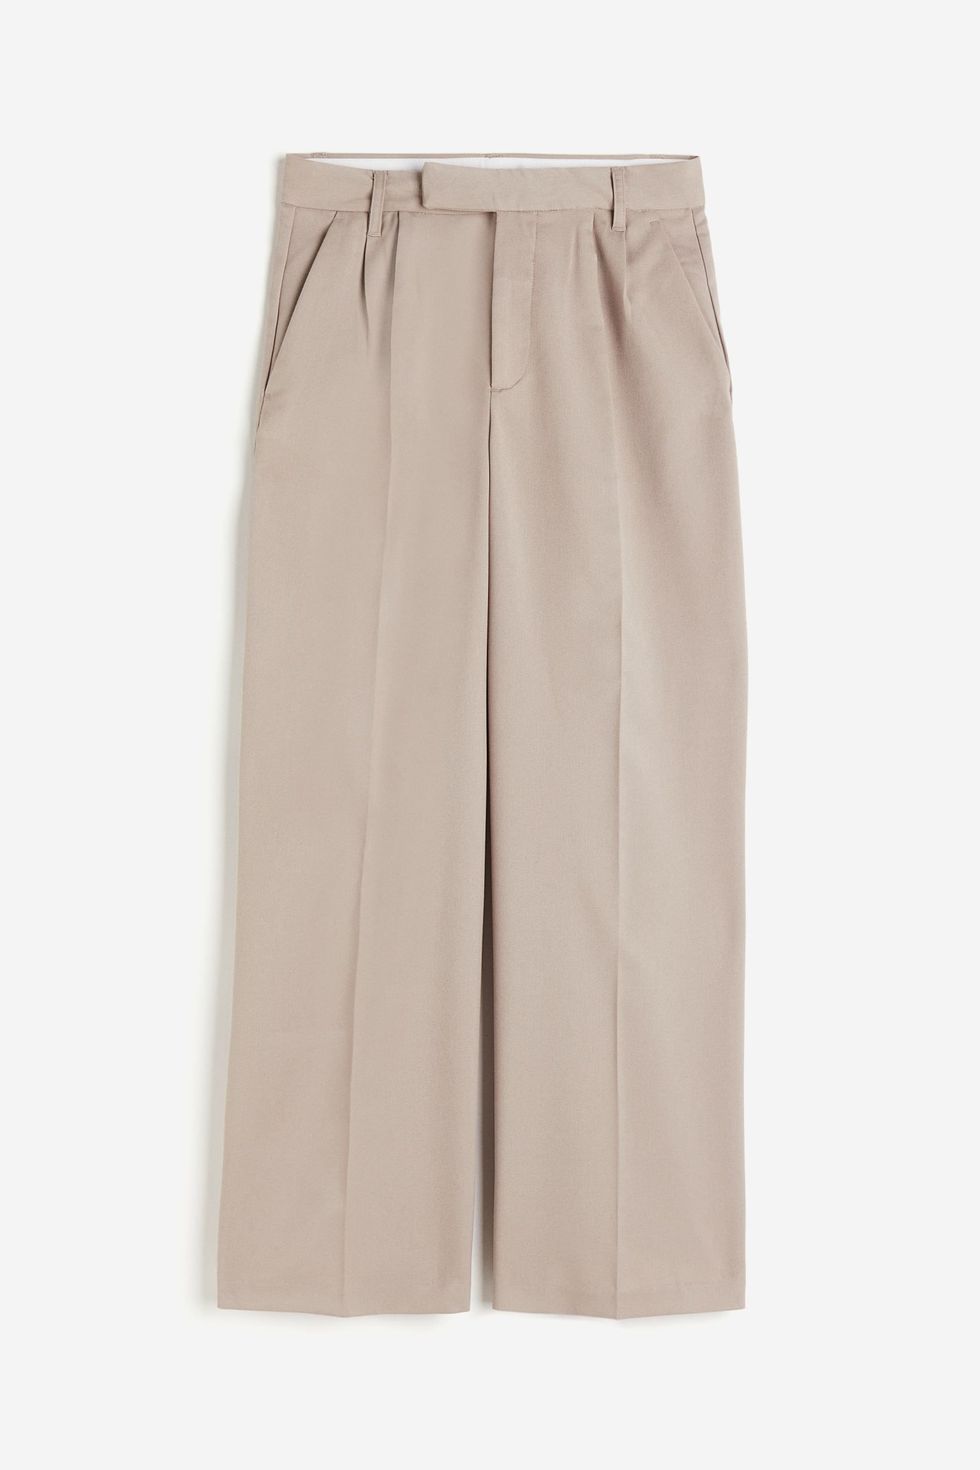 Pantaloni beige eleganti, H&M